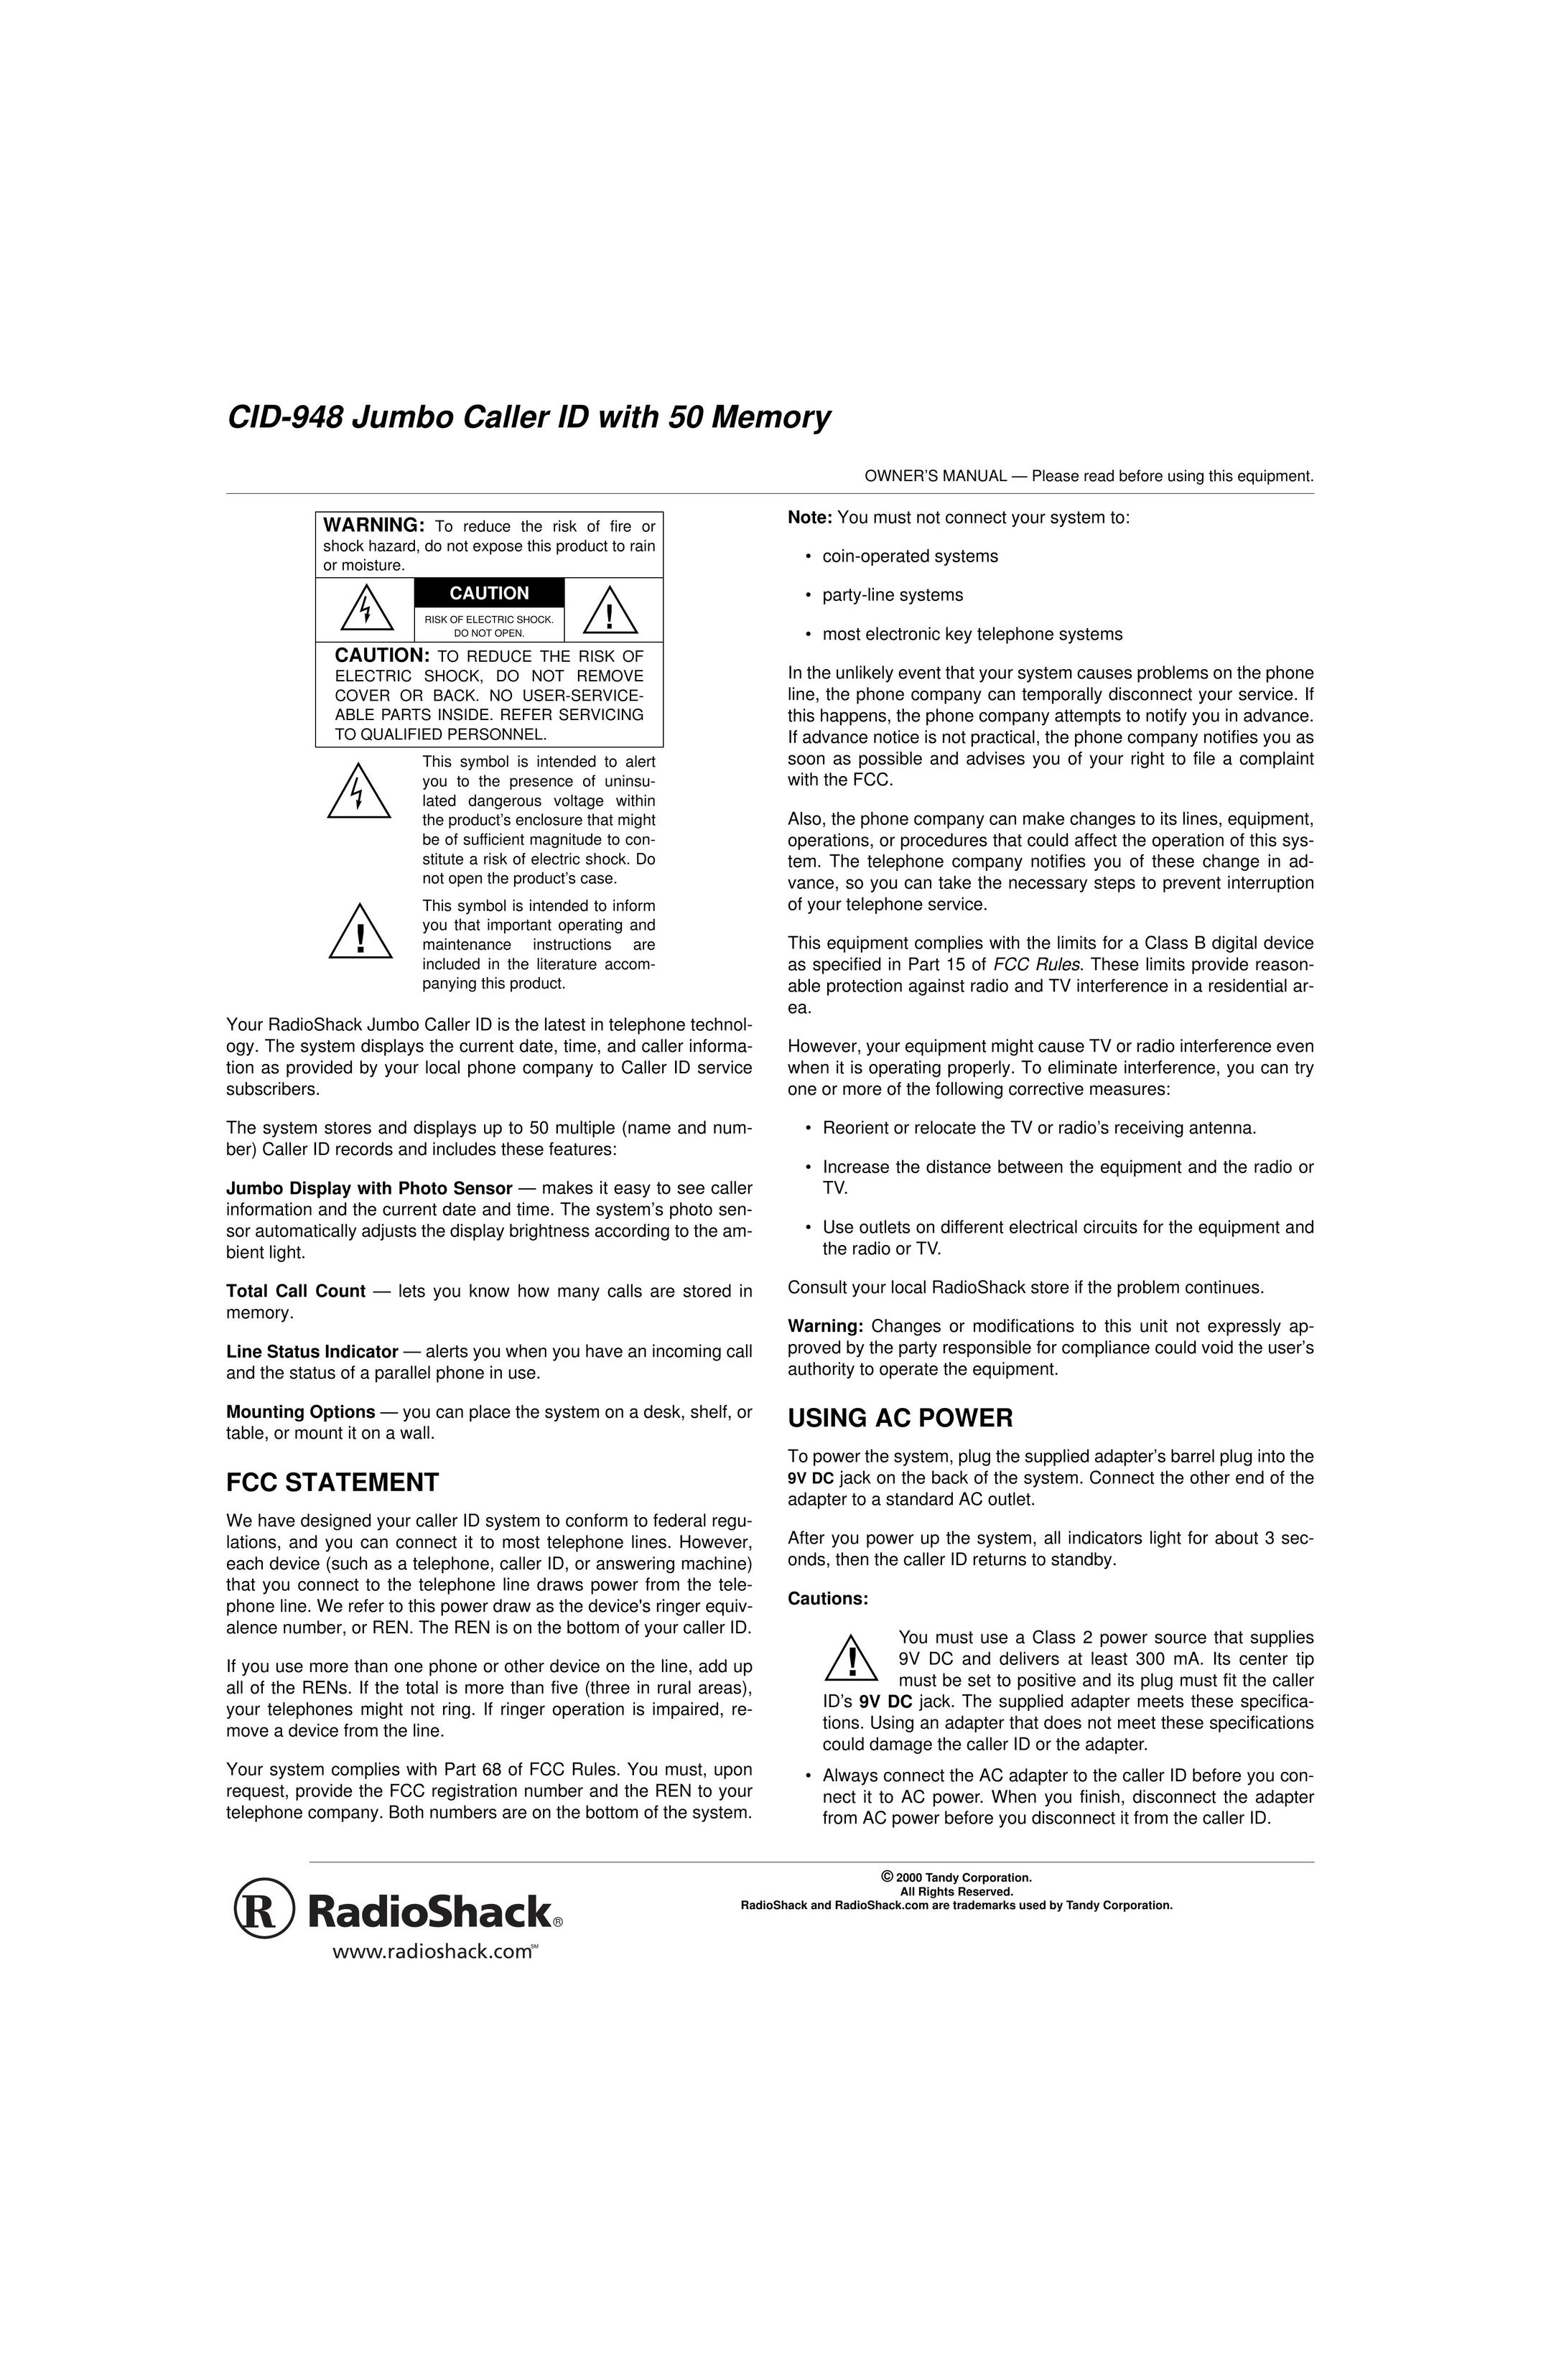 Radio Shack CID-948 Caller ID Box User Manual